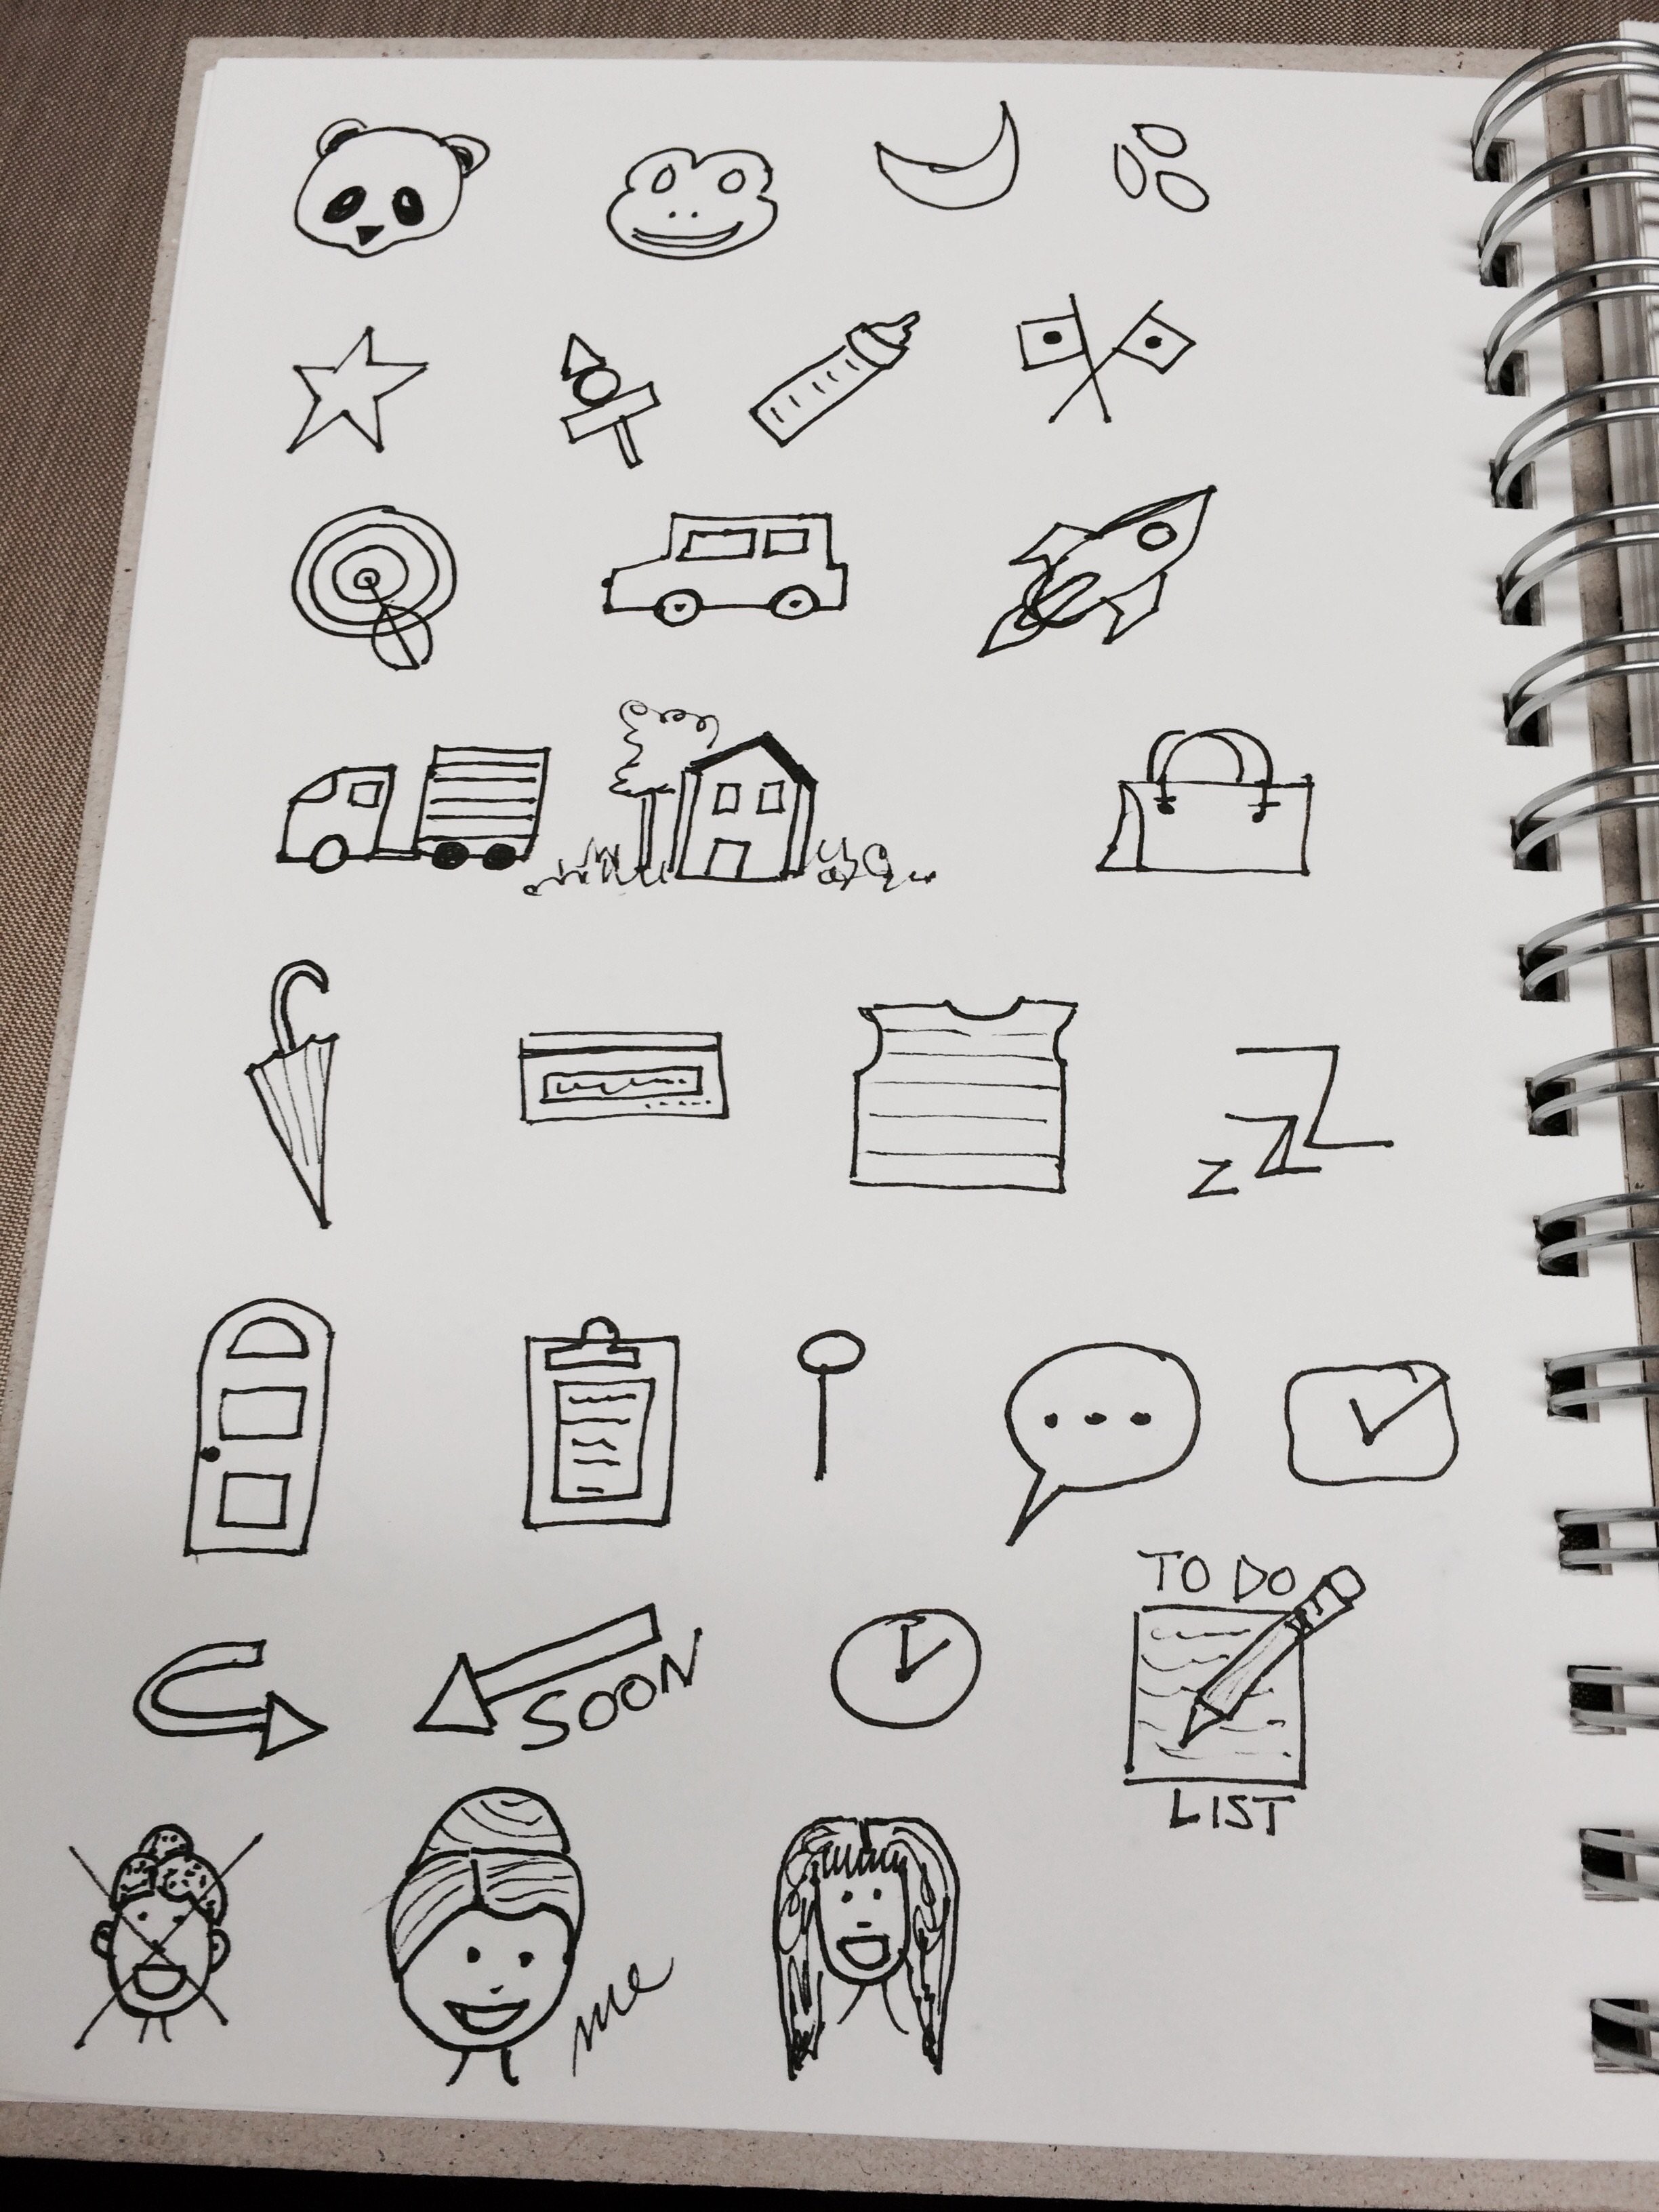 Emojili icons as Doodles in Doodled image